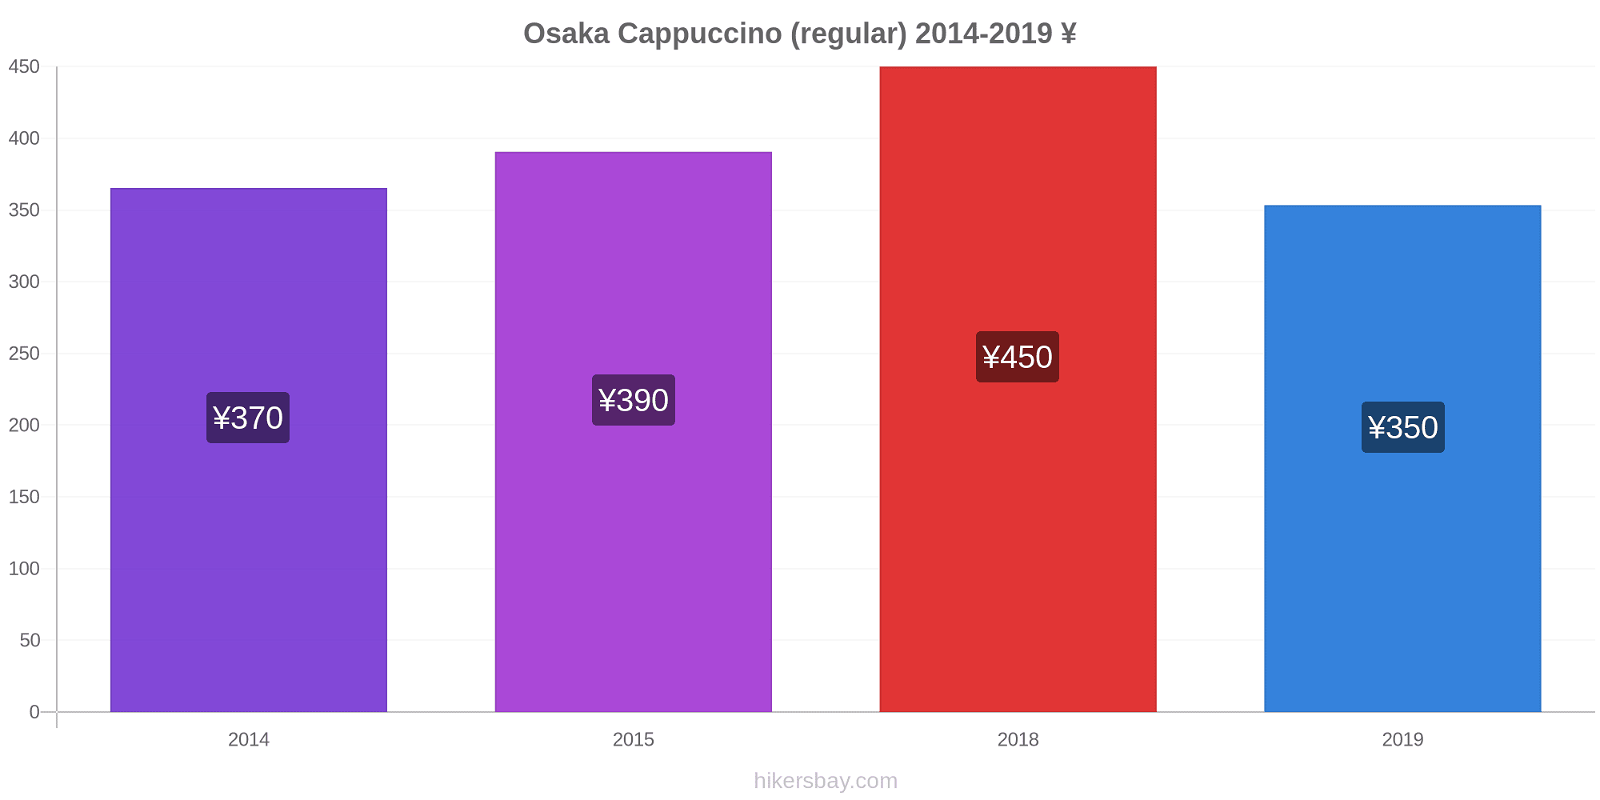 Osaka price changes Cappuccino (regular) hikersbay.com